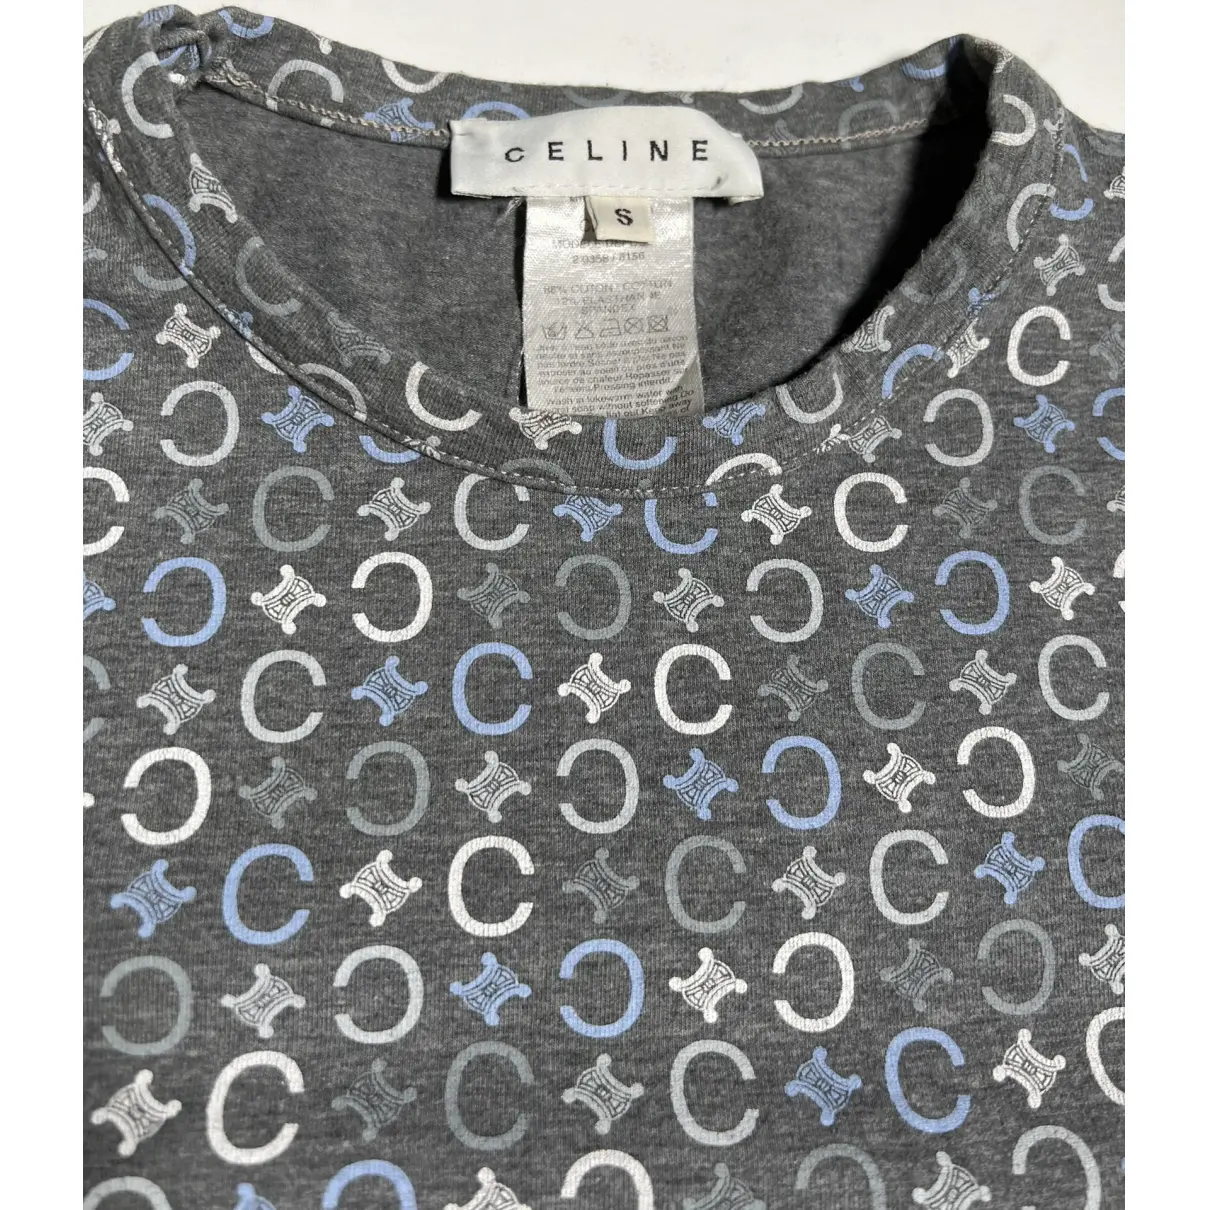 Buy Celine T-shirt online